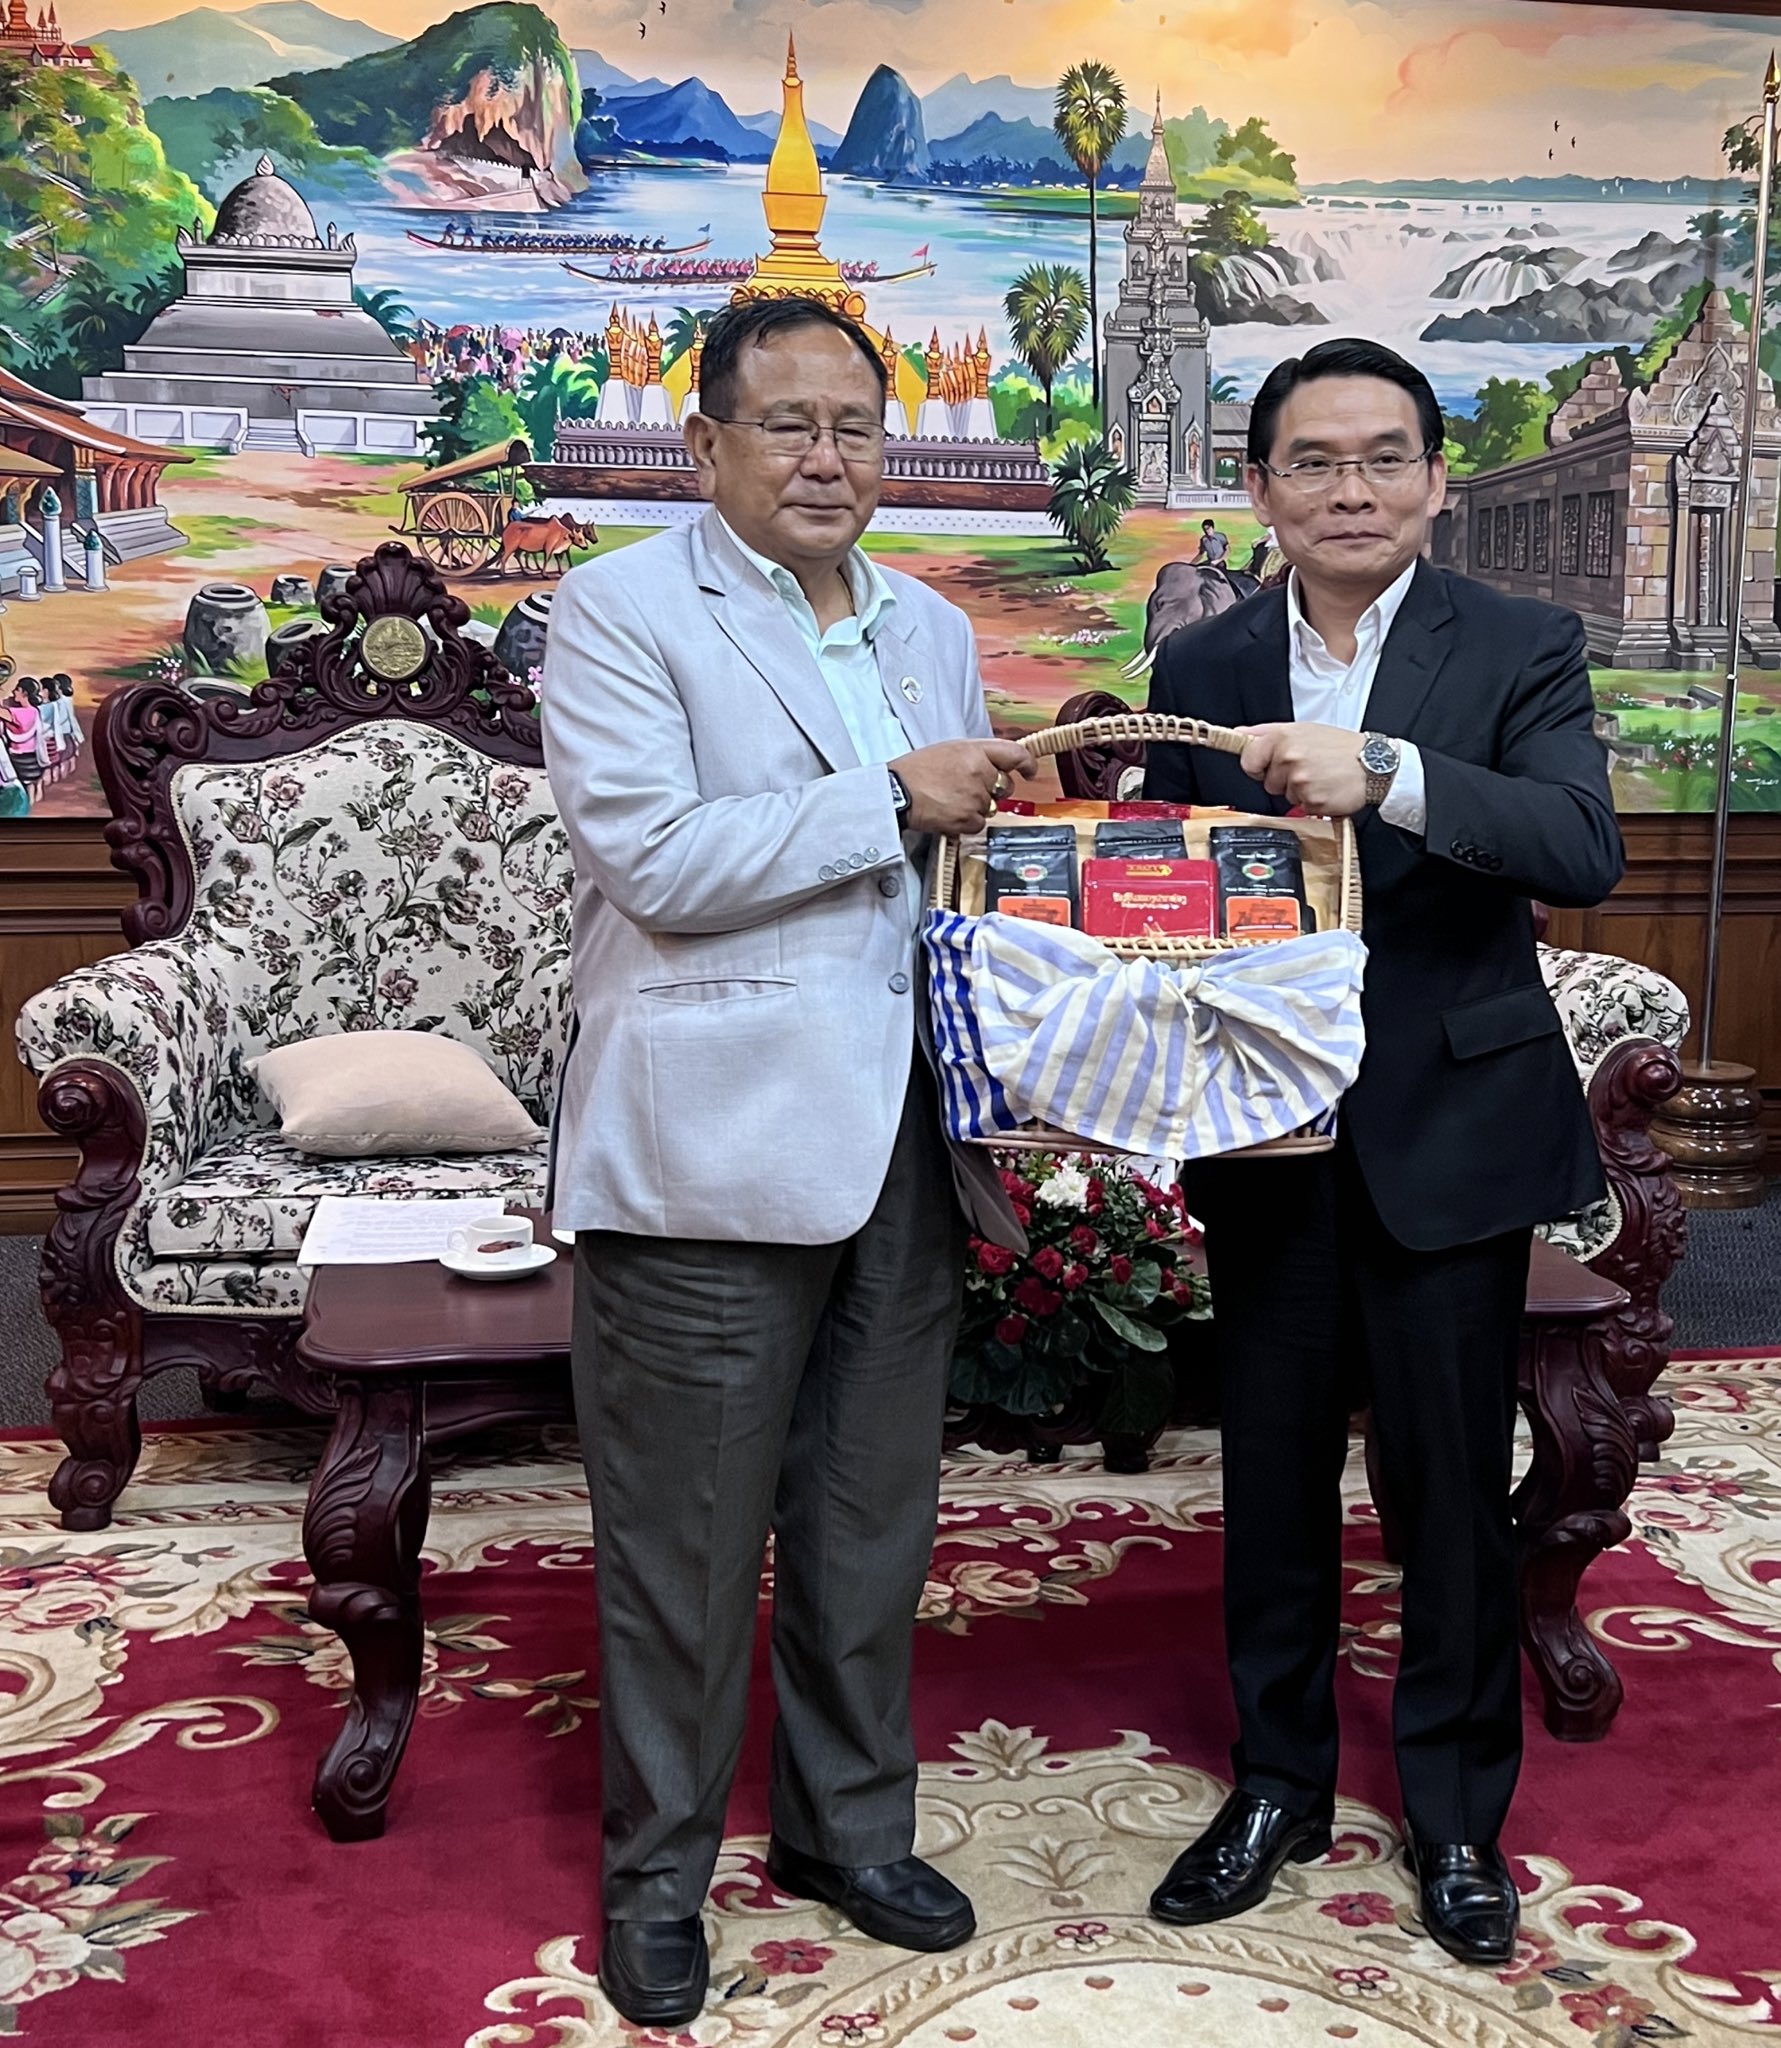 Meeting of Hon'ble MoS Dr. Rajkumar Ranjan Singh with H.E. Dr. Vilayvong Bouddakham, Governor of Champasak Provice, Lao-PDR